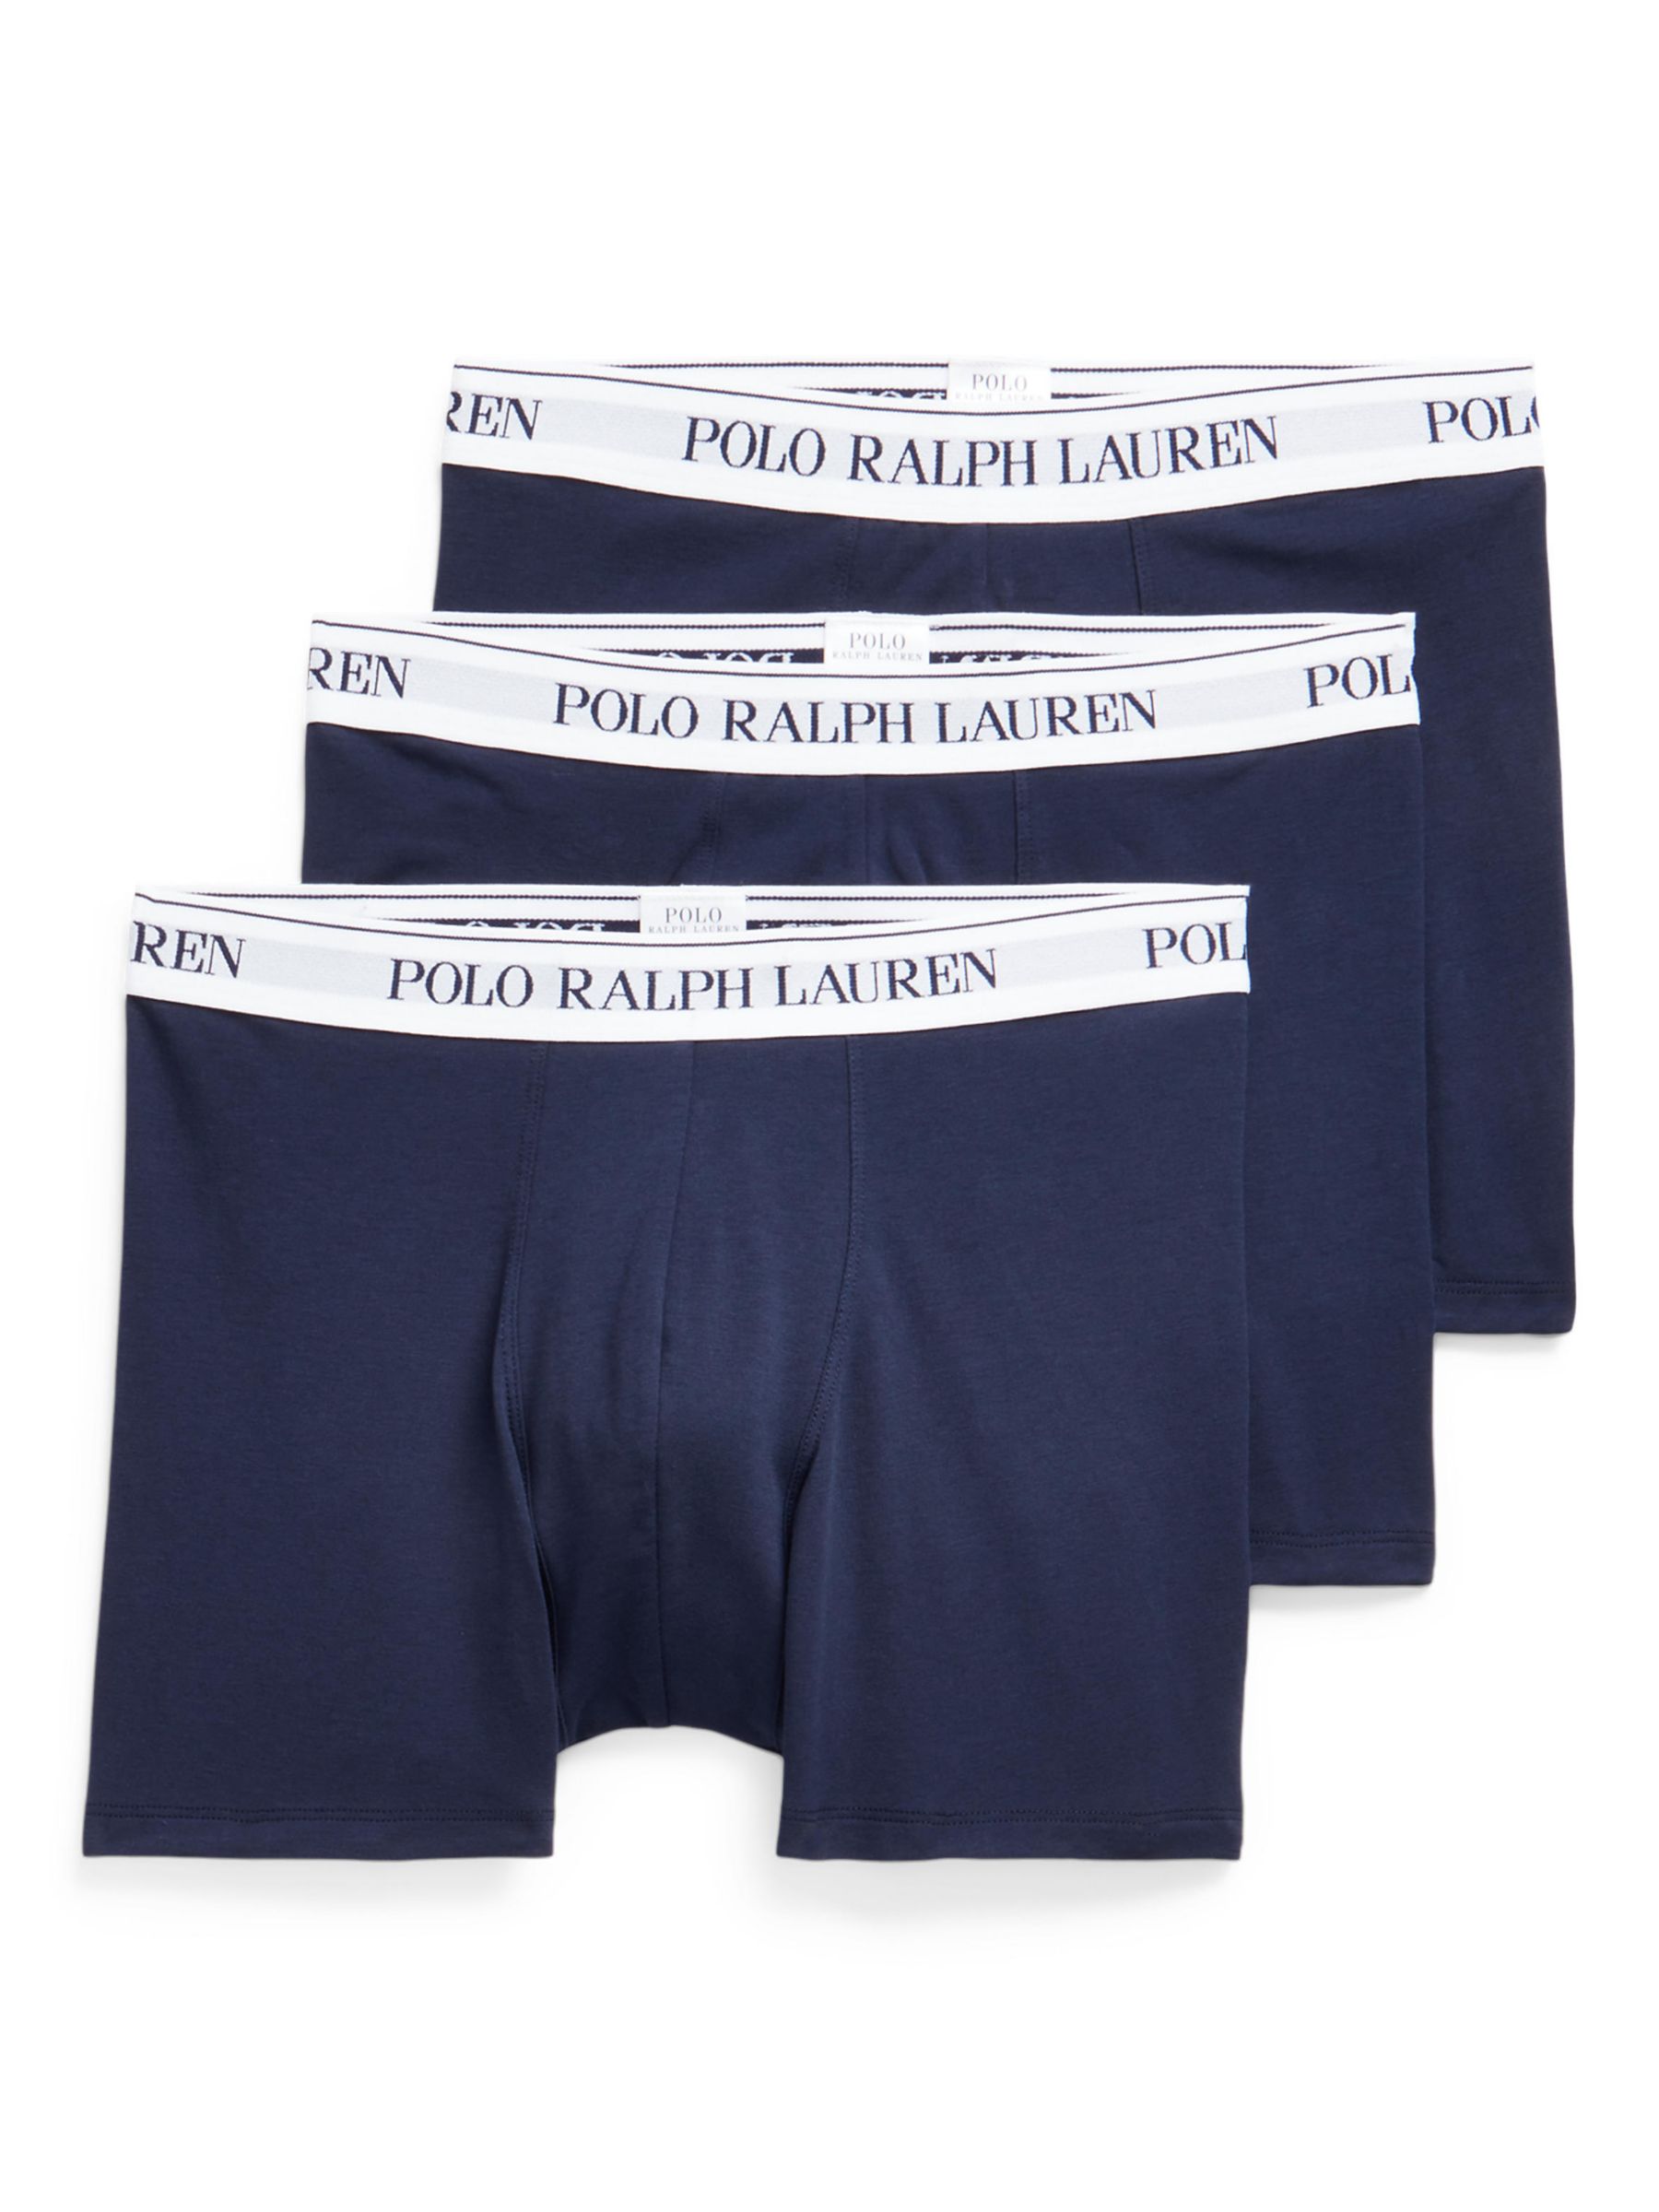 Polo Ralph Lauren Stretch Cotton Boxer Briefs, Pack of 3, Navy